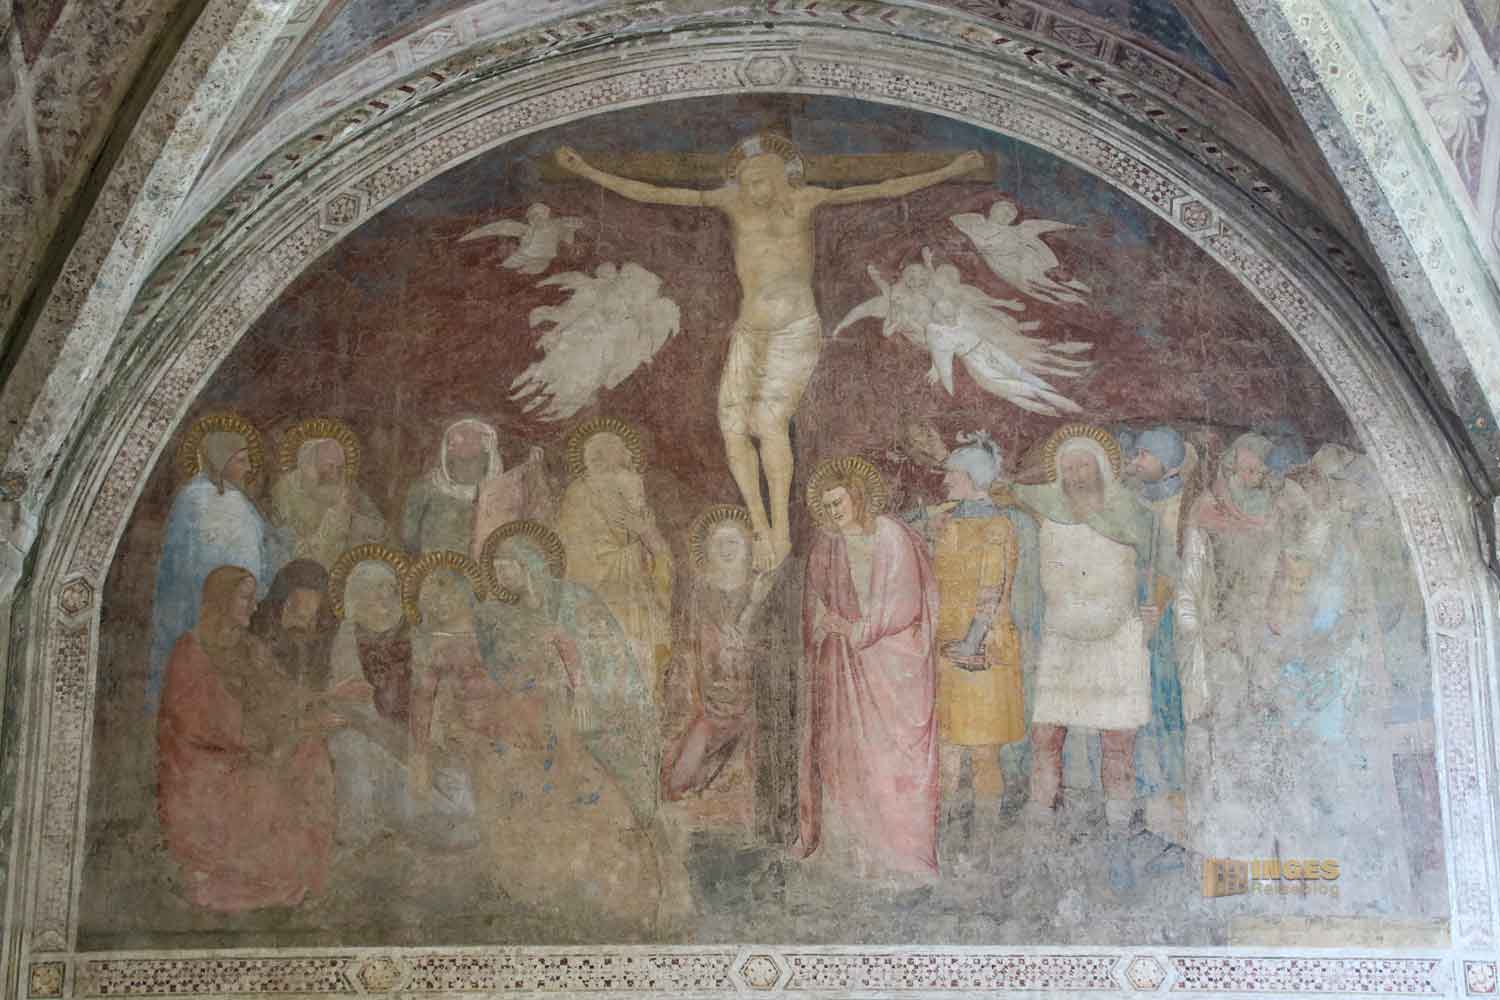 fresken im kreuzgang der toten santa maria novella florenz 2916